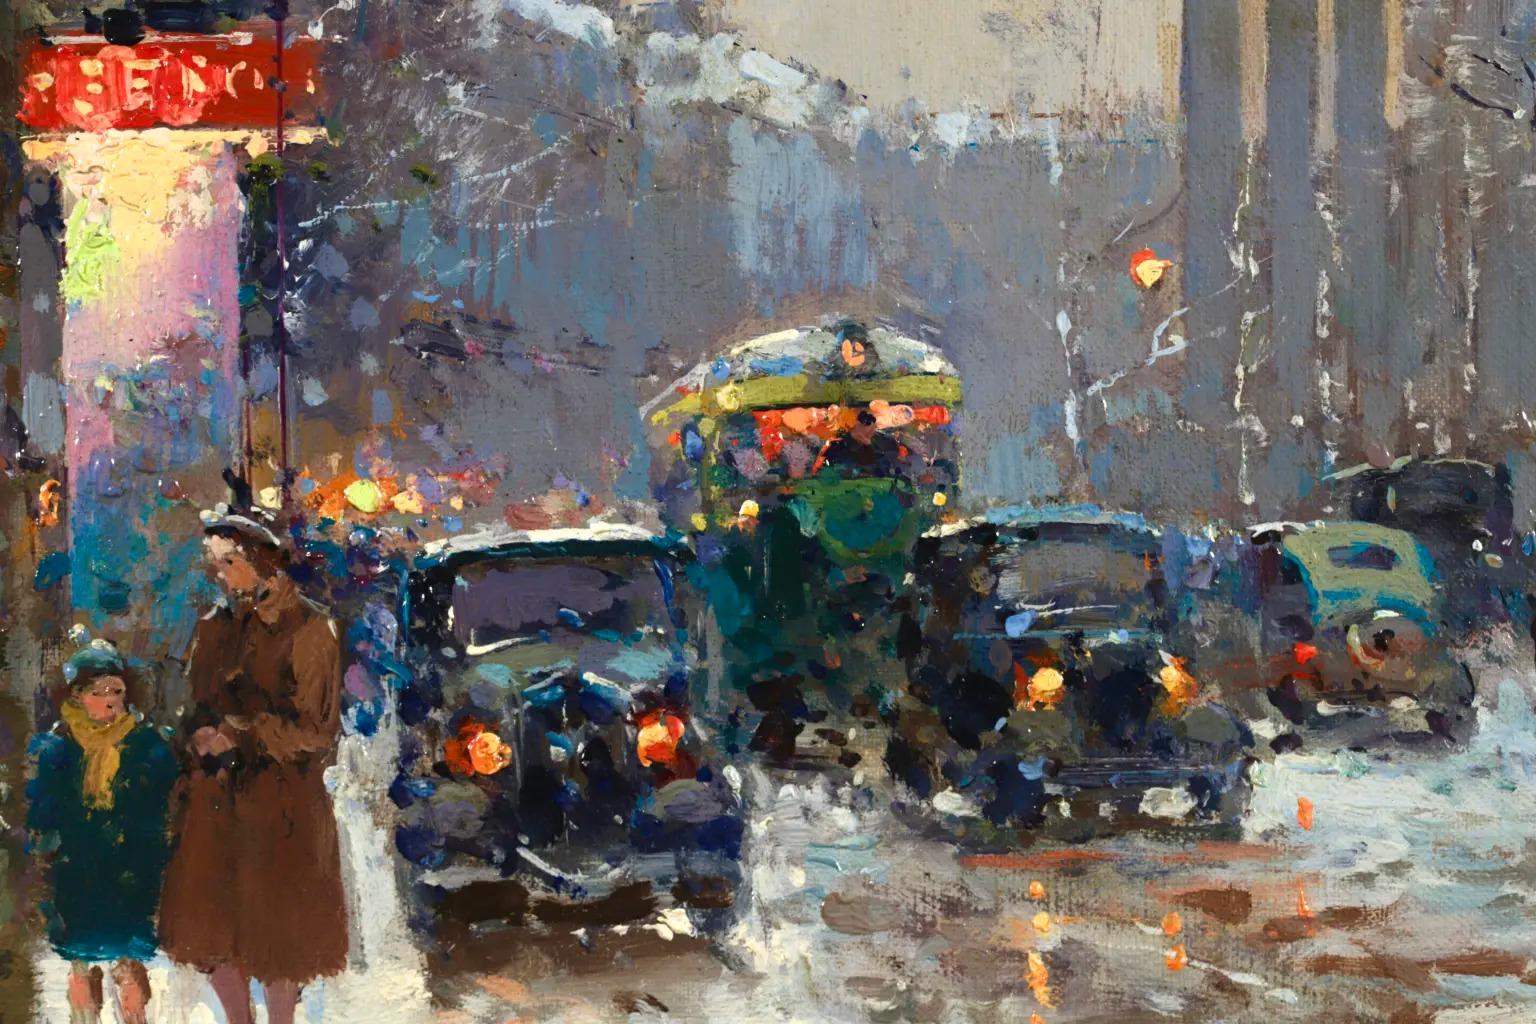 La Madeleine – Le Soir Impressionist Cityscape Oil Painting by Edouard Cortes For Sale 7